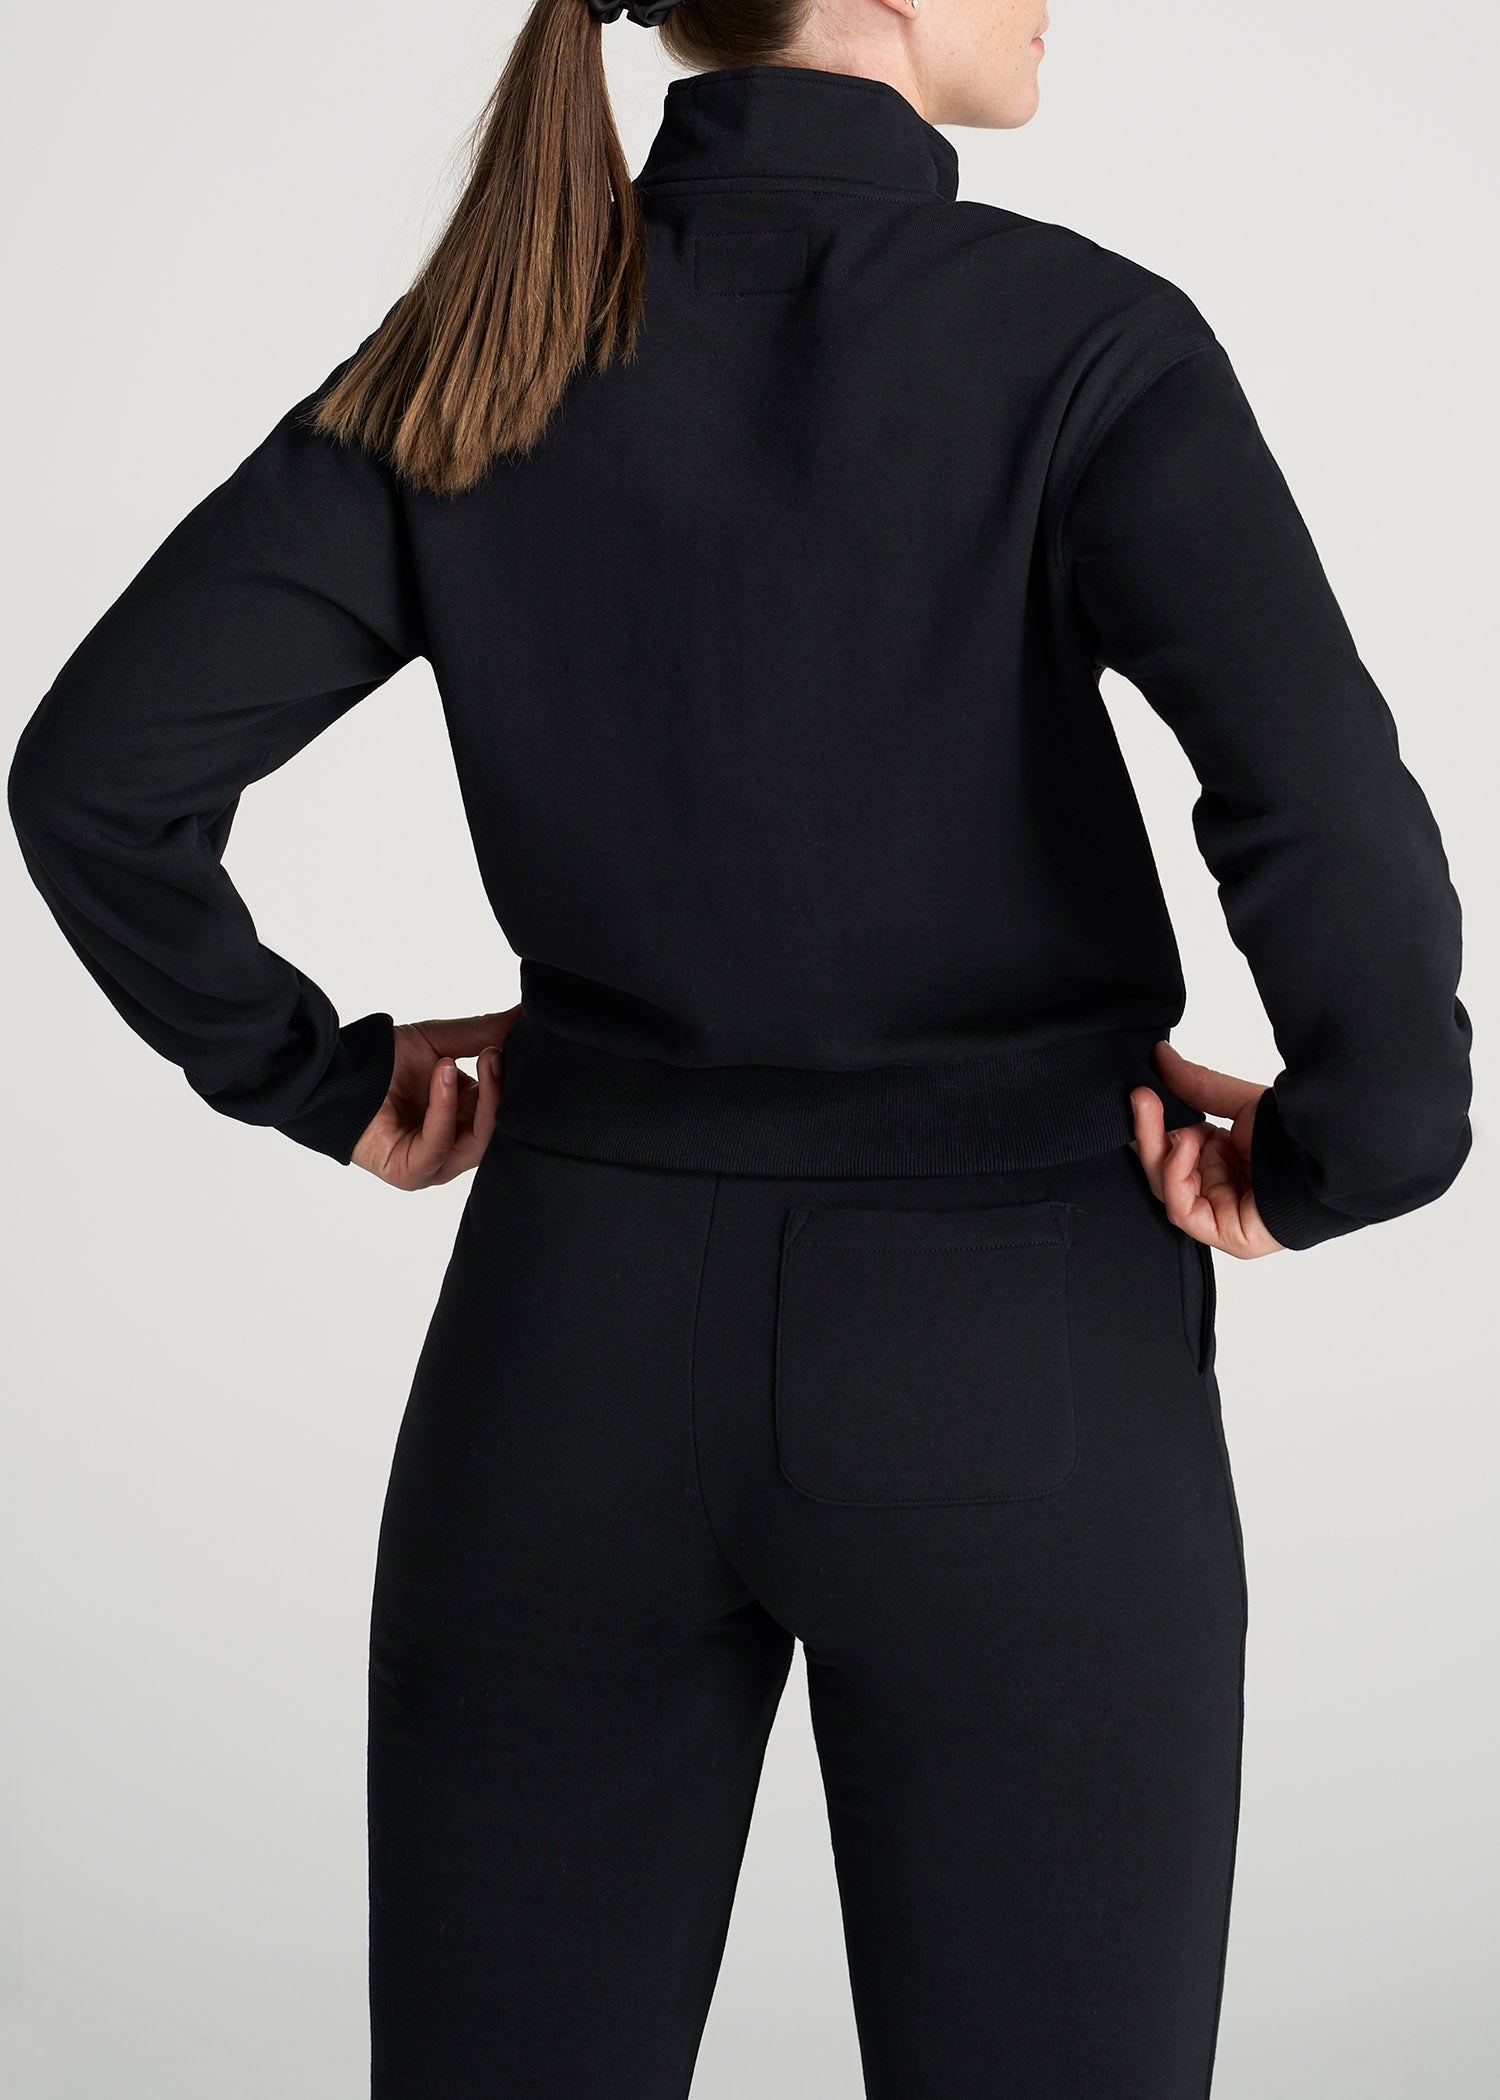 American-Tall-Women-8020-PD-HalfZip-Sweatshirt-Black-back